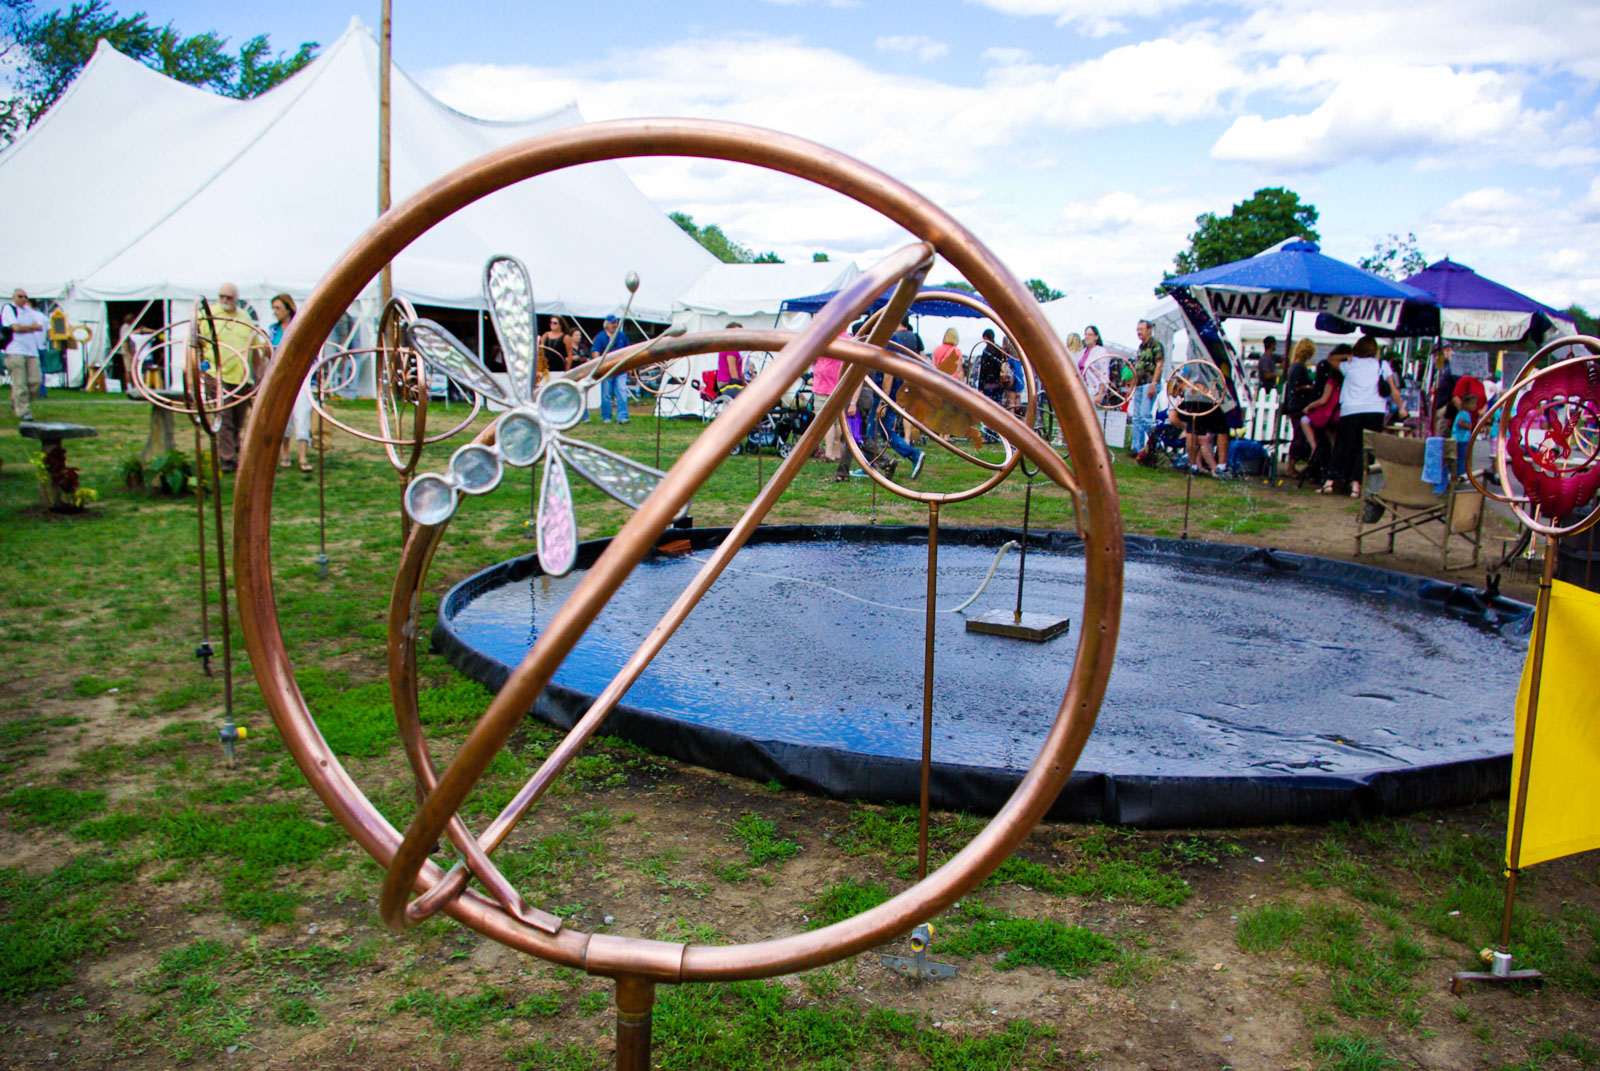 Landscape Arts Handmade Sprinklers at the Woodstock-New Paltz Art & Crafts Fair